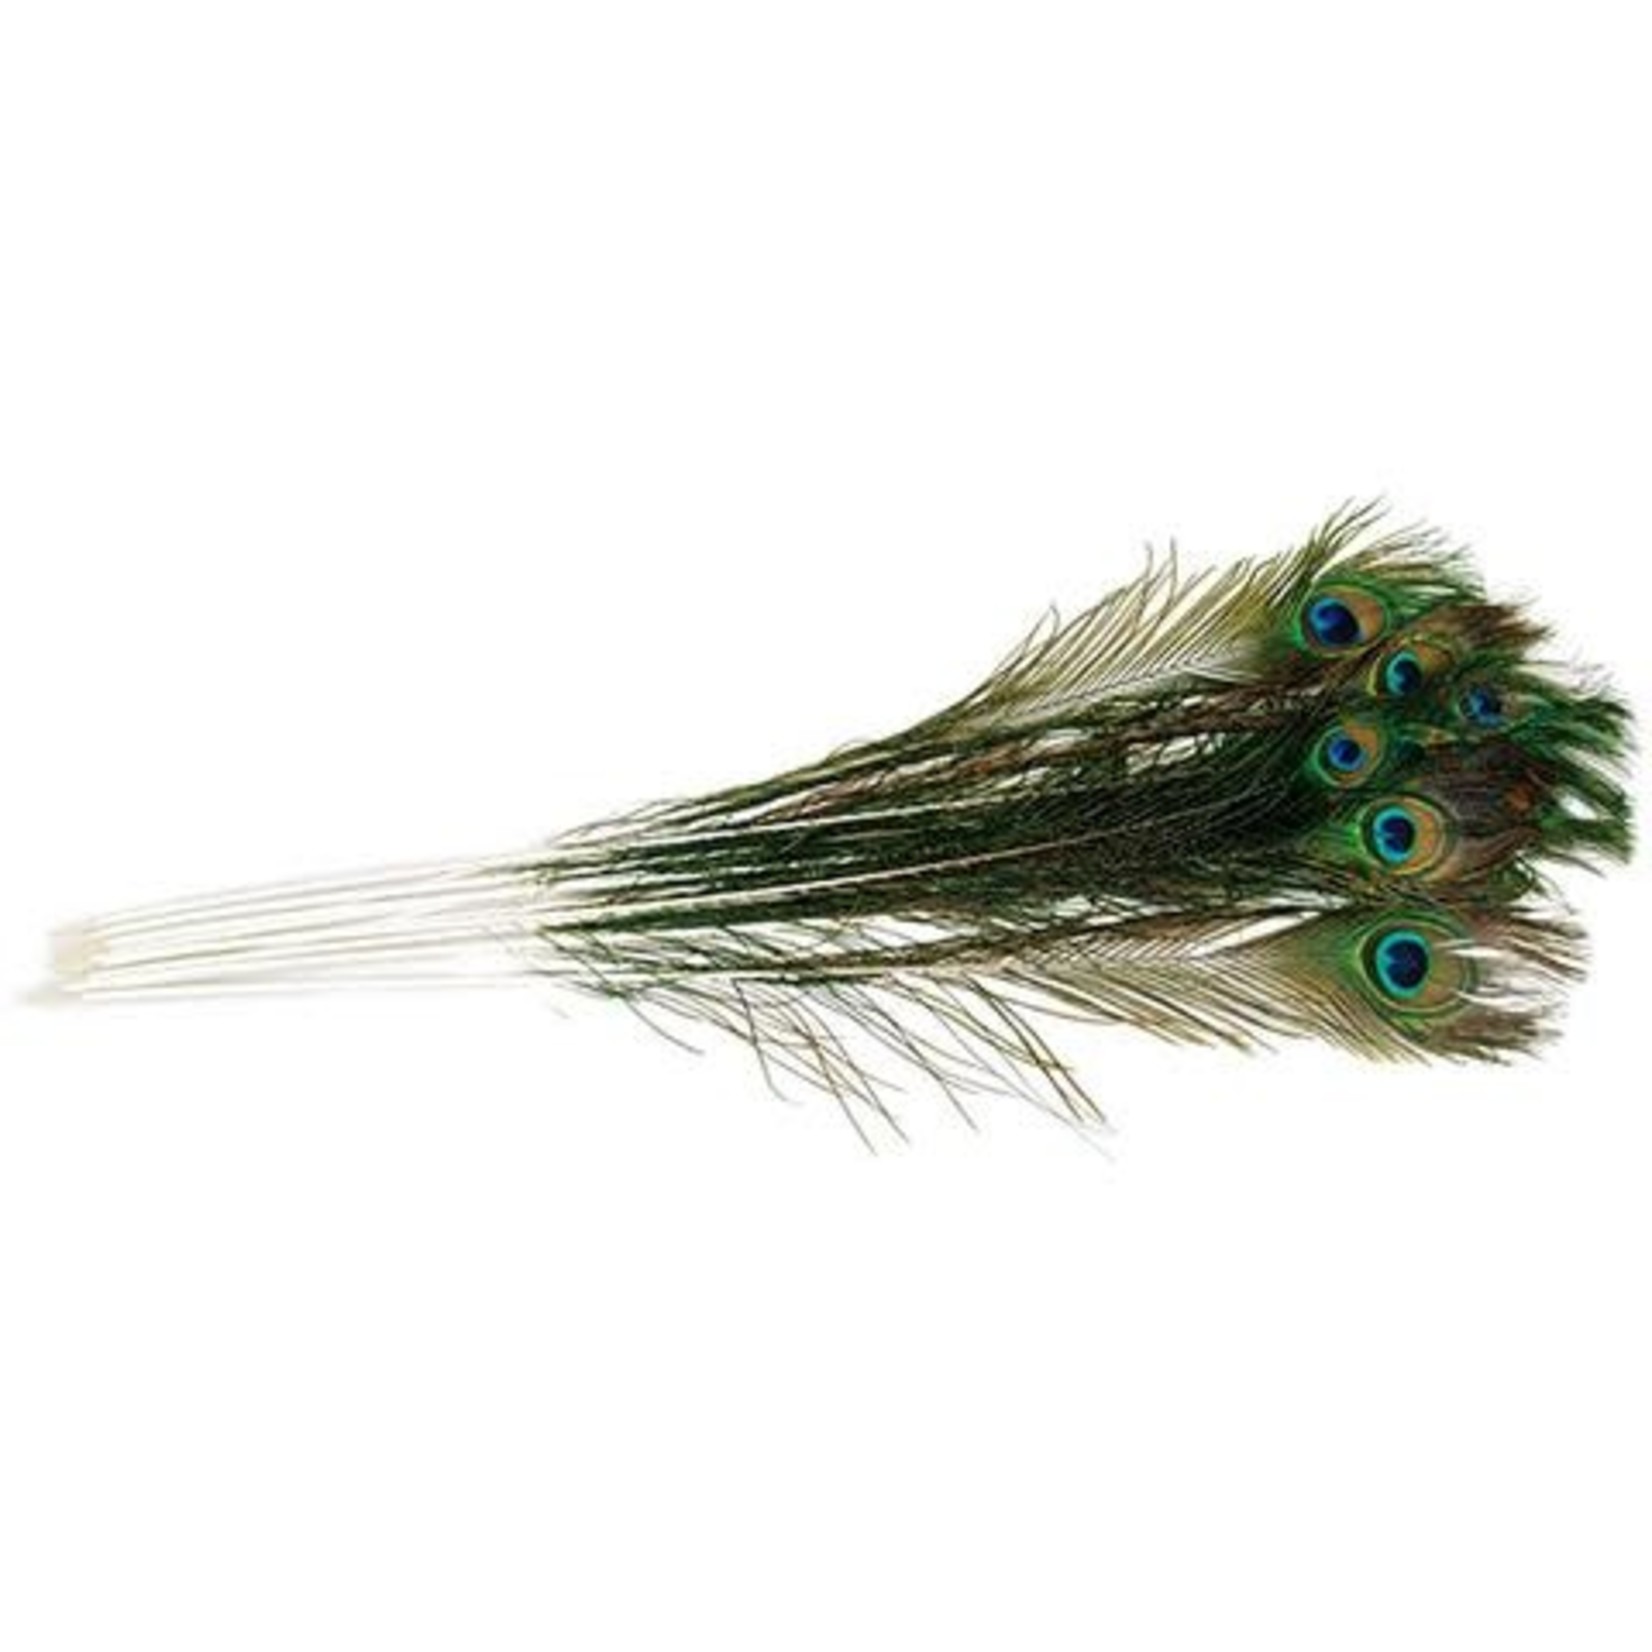 Vee Enterprises PURRfect Peacock Feather (Single)